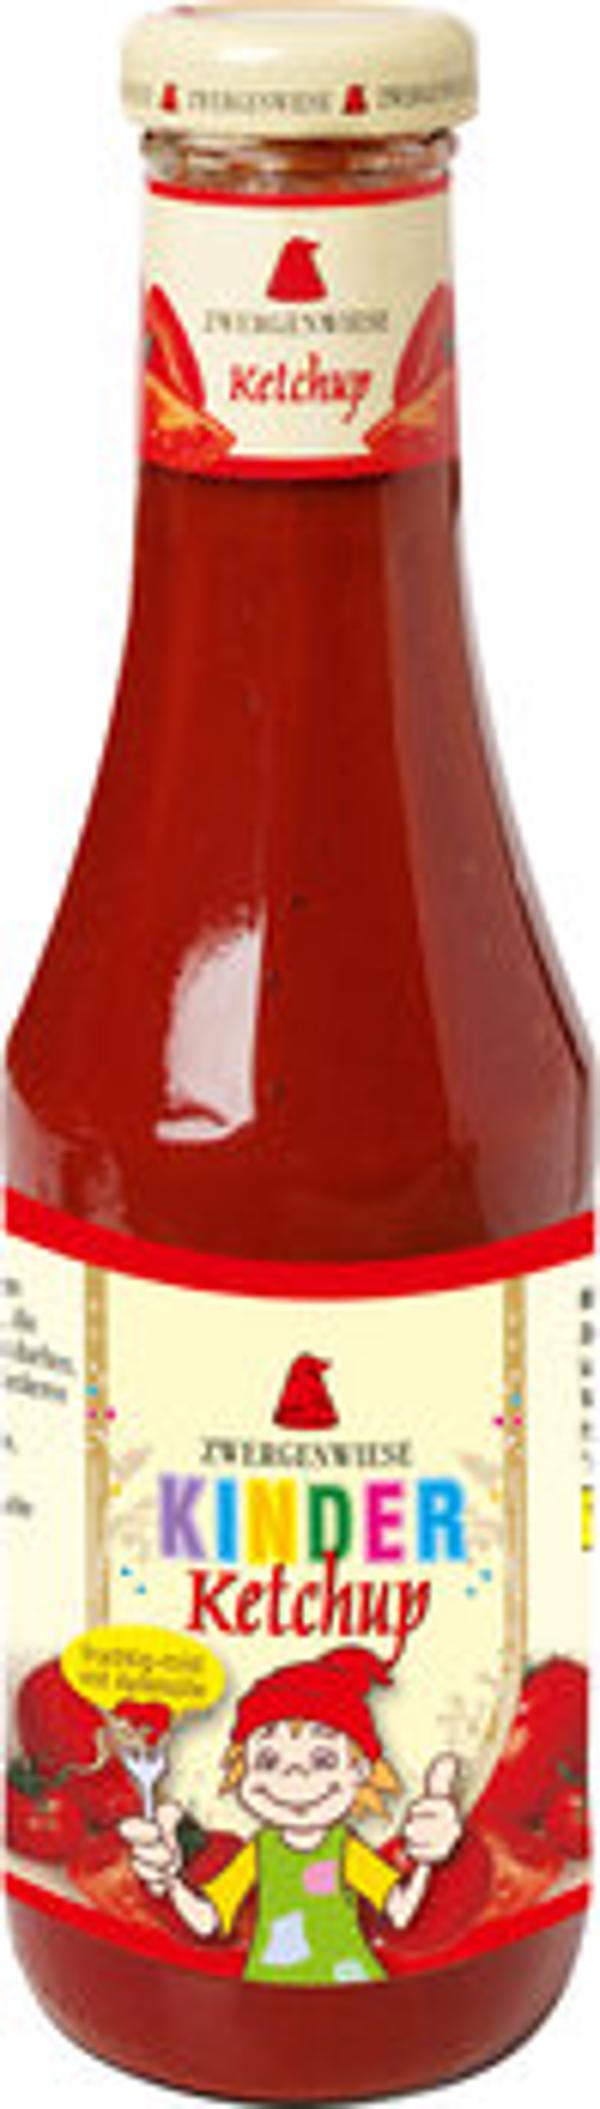 Produktfoto zu Kinder-Ketchup 500 ml